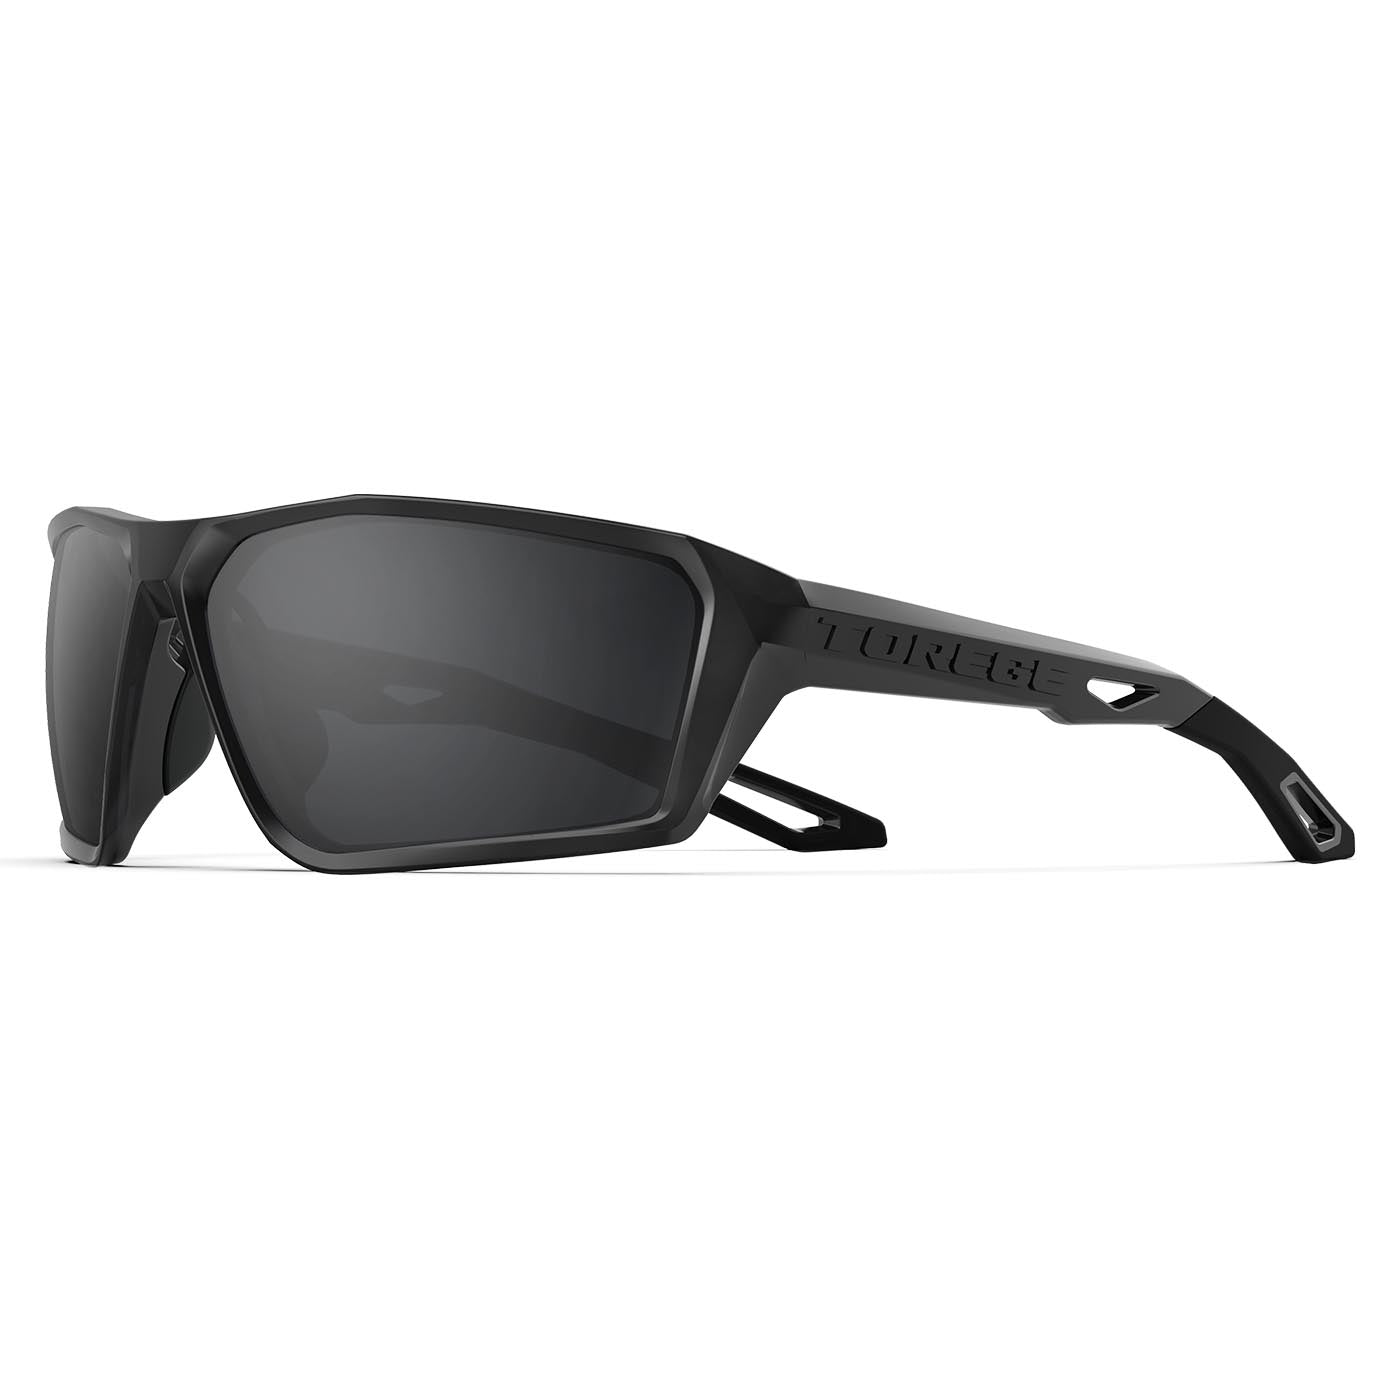 Rhinoceros Premium Sports Polarized Sunglasses for Men & Women - Lifetime  Warranty - Ideal for Running, Cycling, Driving, Fishing & Outdoor  Activities - Black Frame & Black lens - Quarter